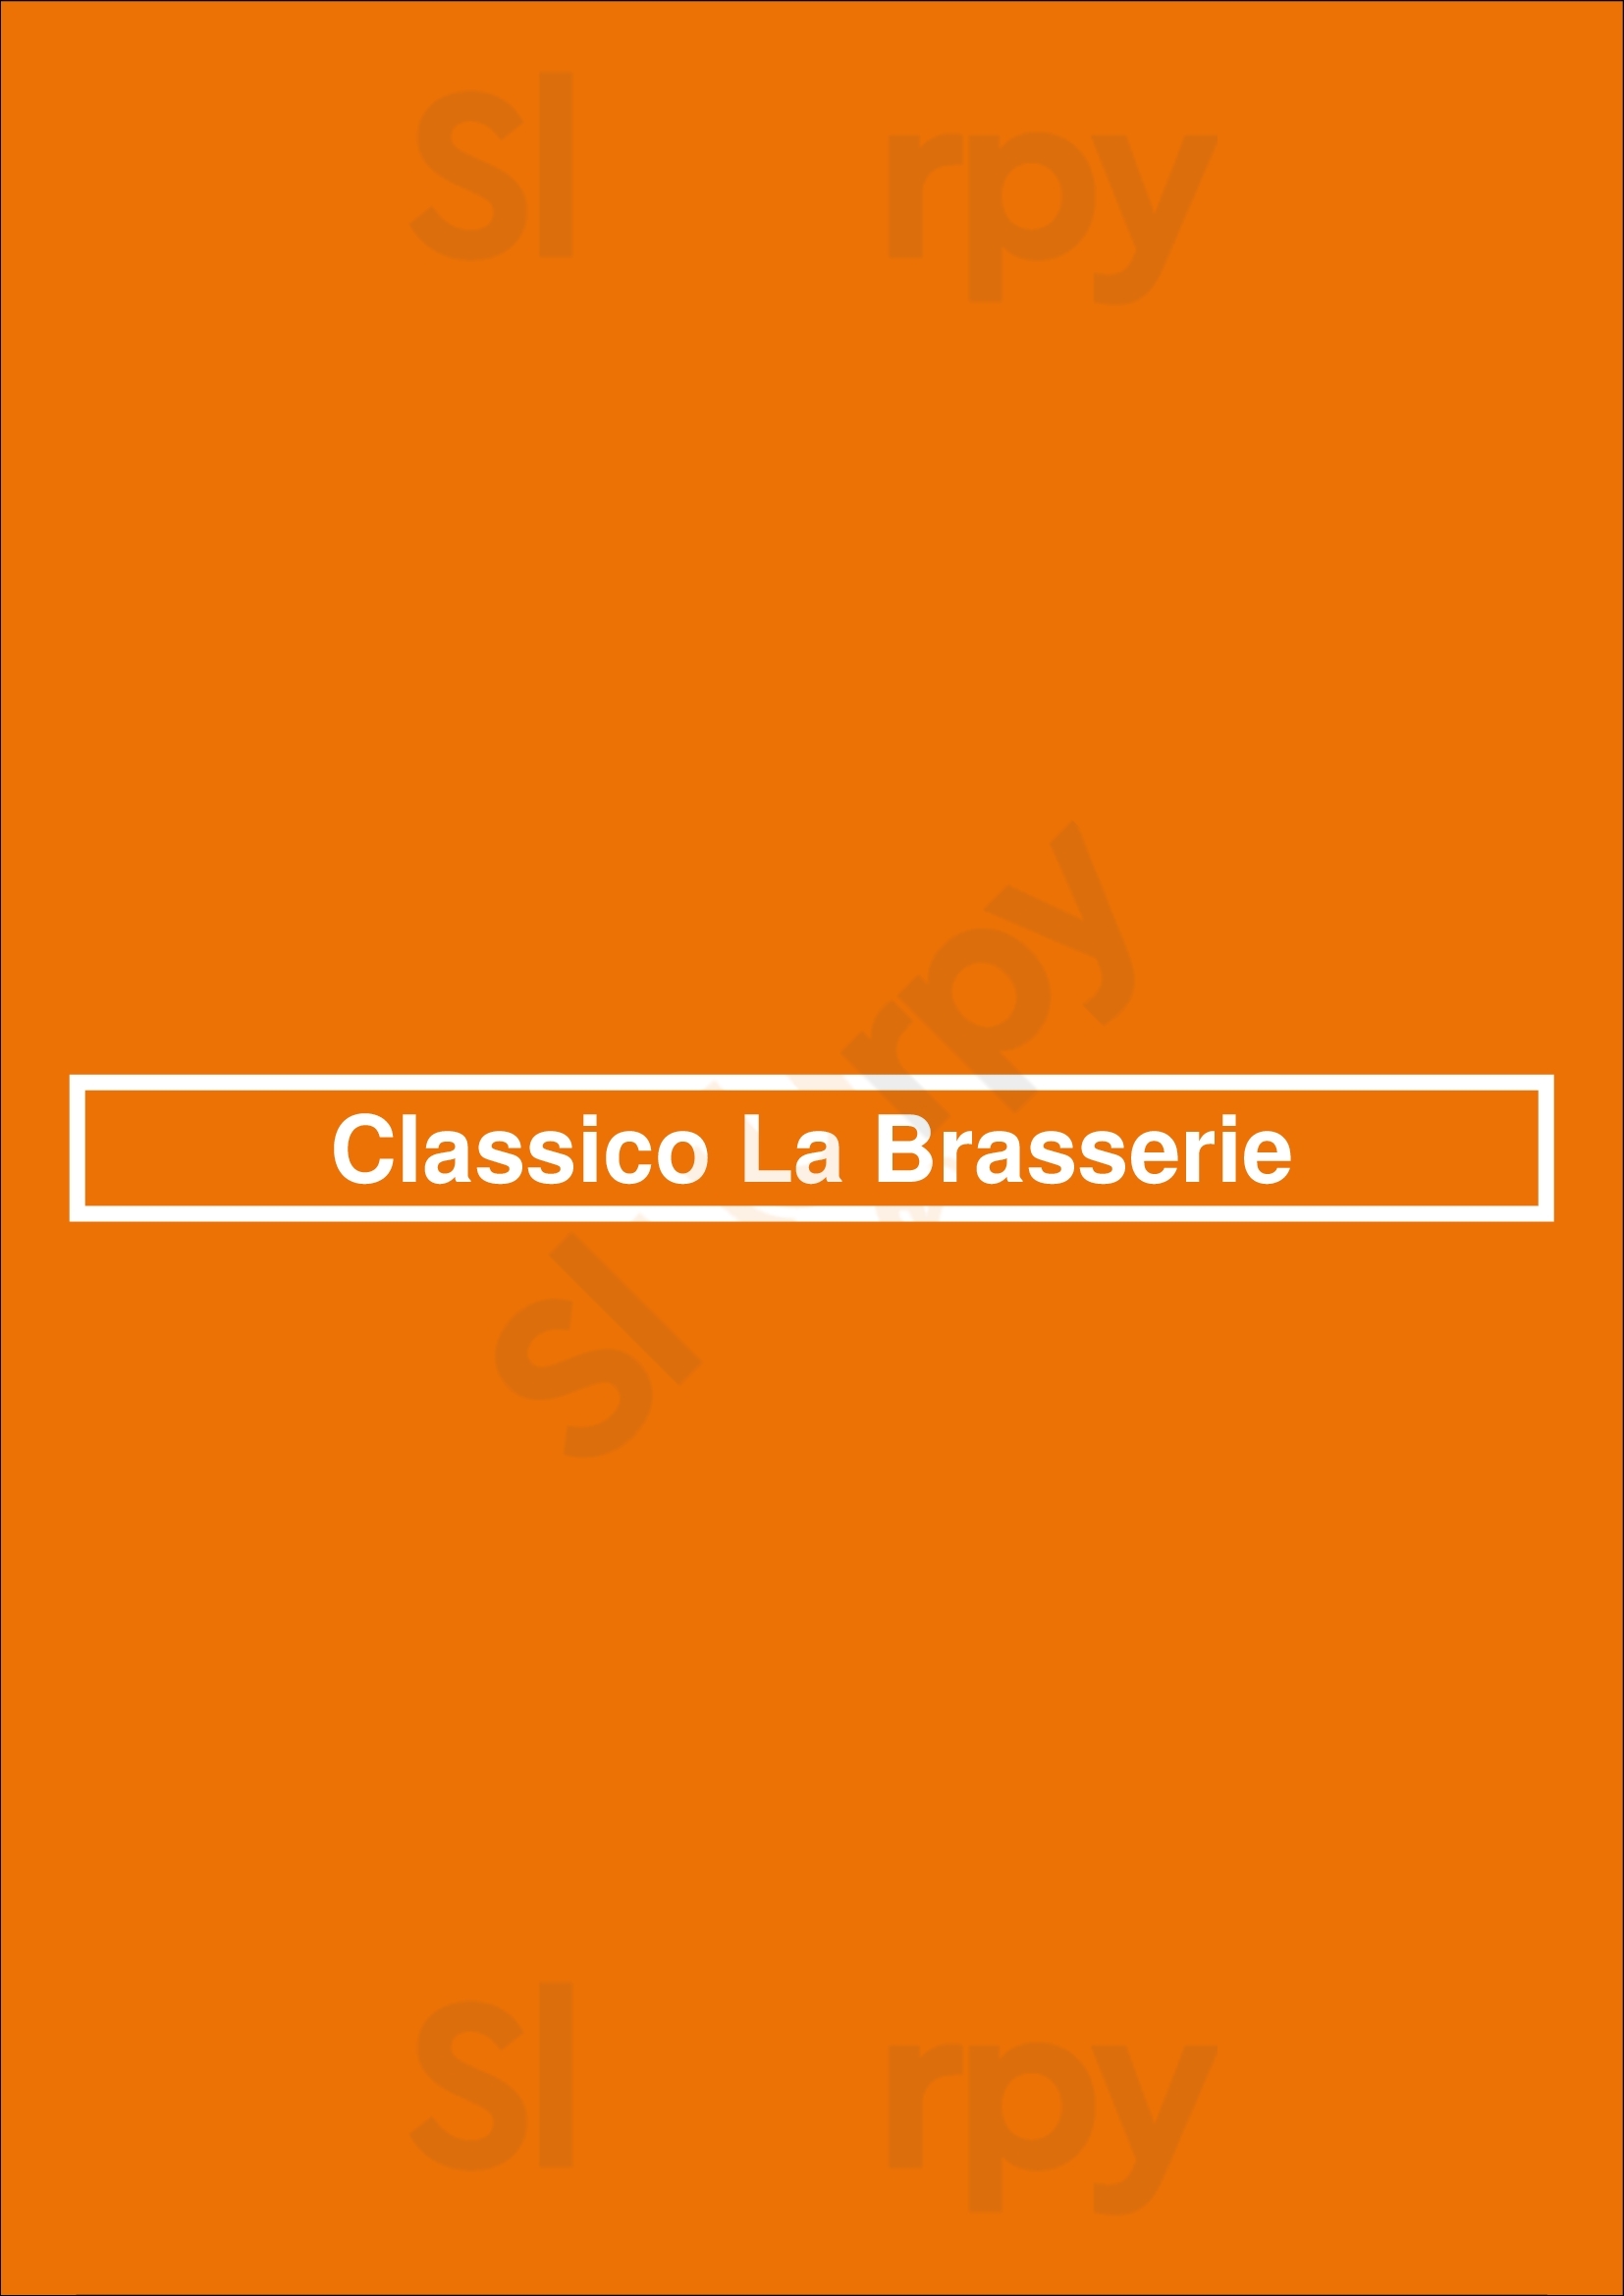 Classico La Brasserie Bruxelles Menu - 1